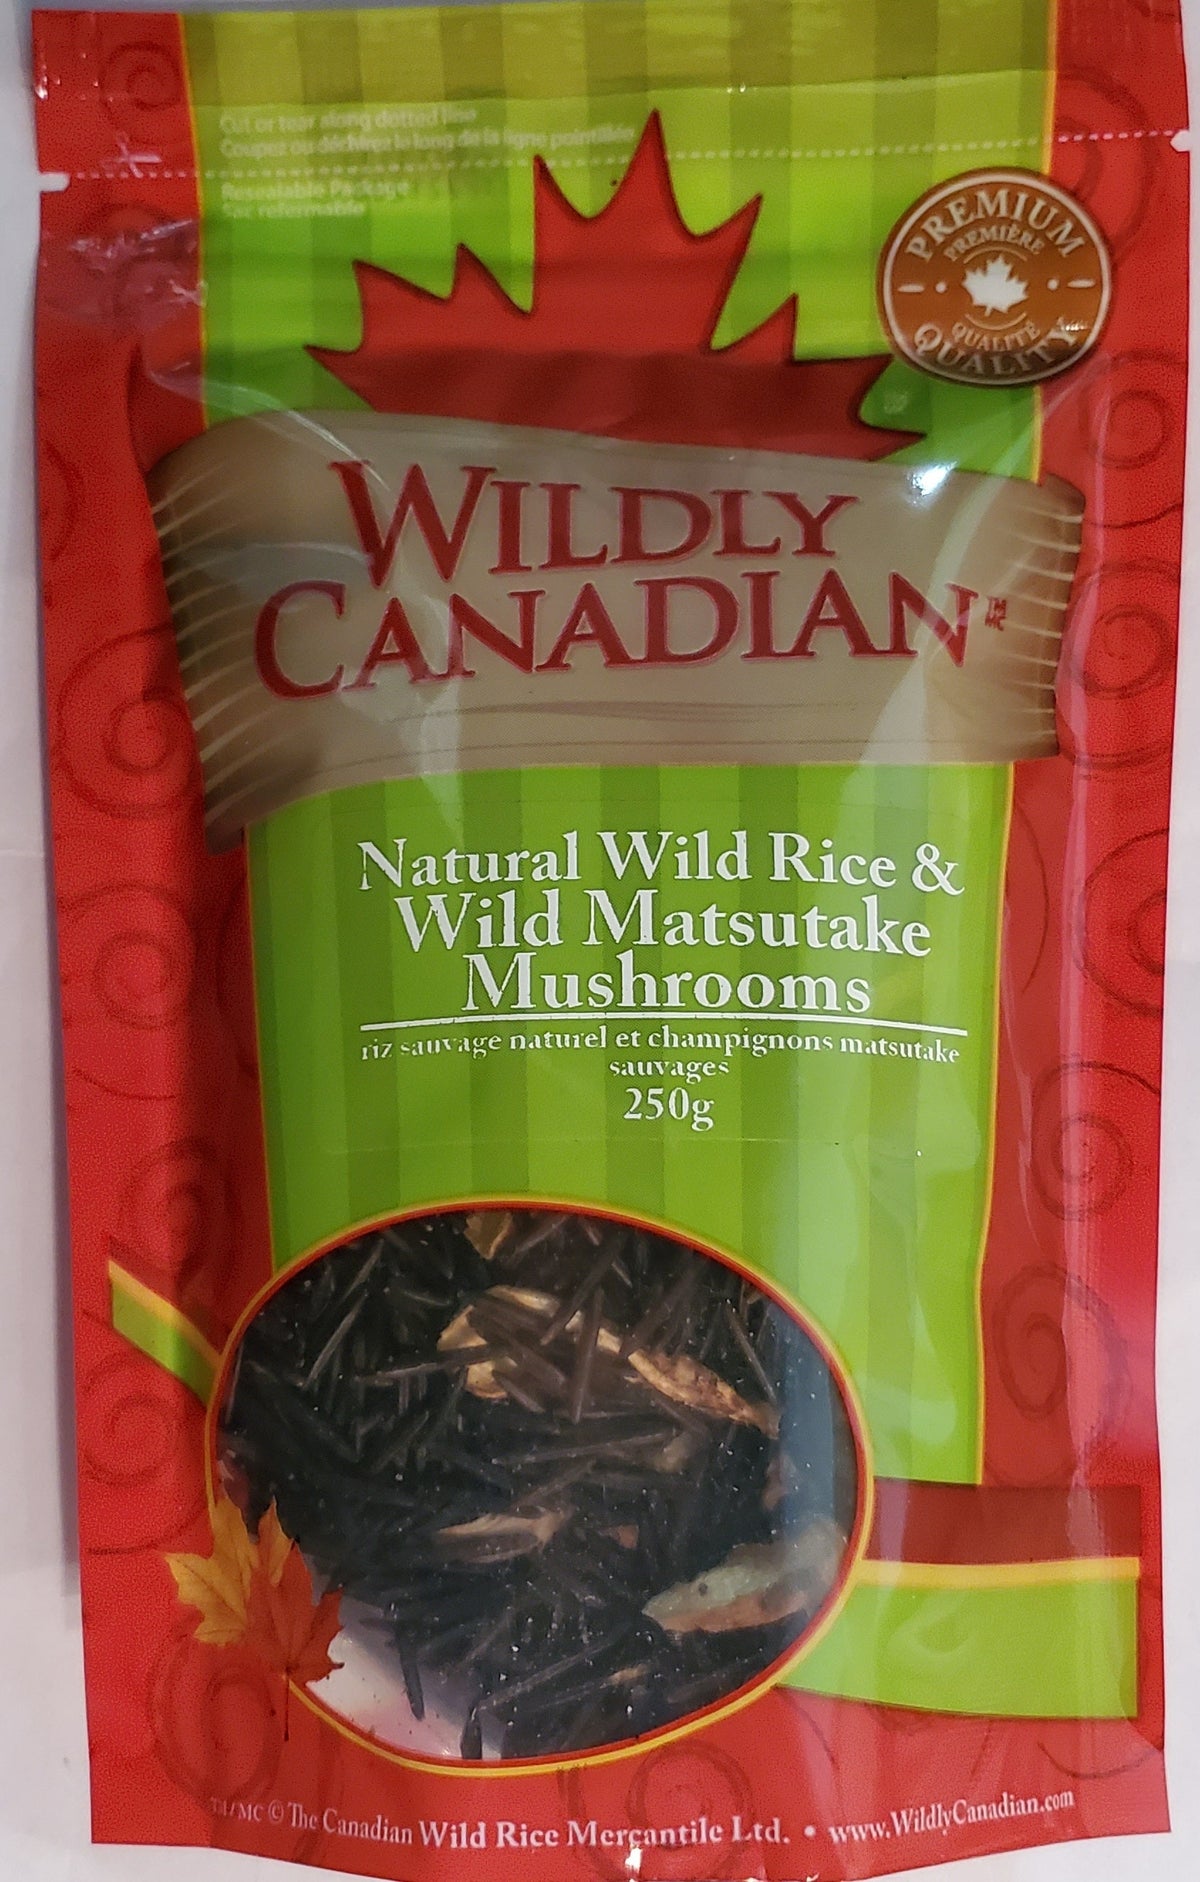 Natural Canadian Wild Rice & Wild Matsutake Mushrooms